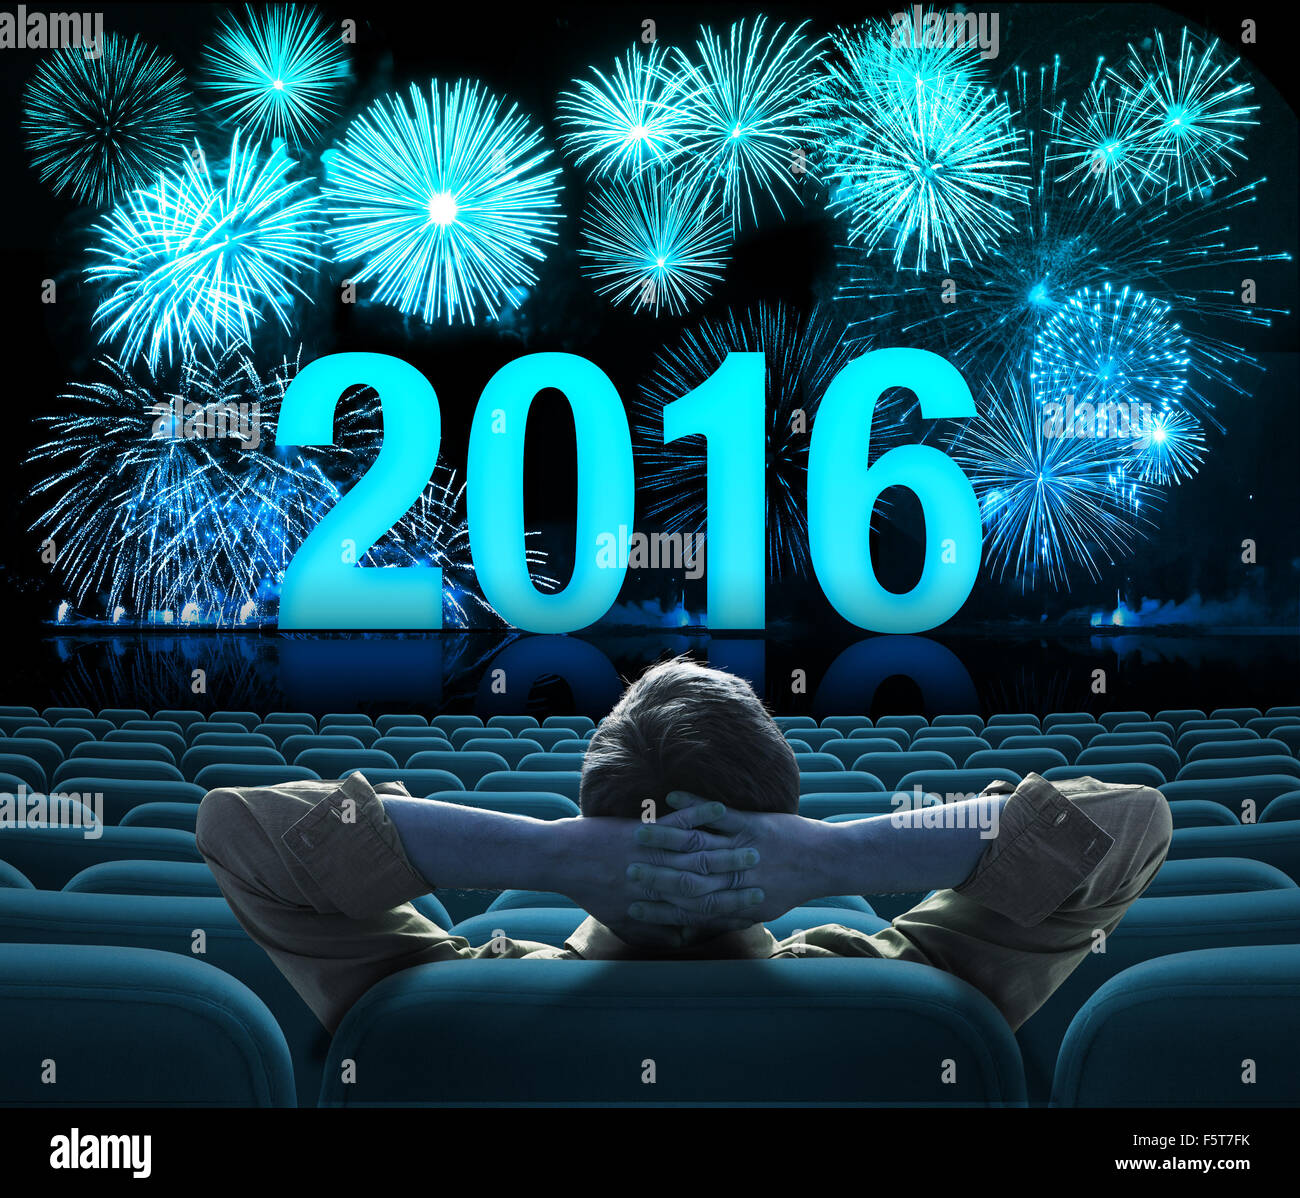 2016 new year fireworks on big cinema screen Stock Photo